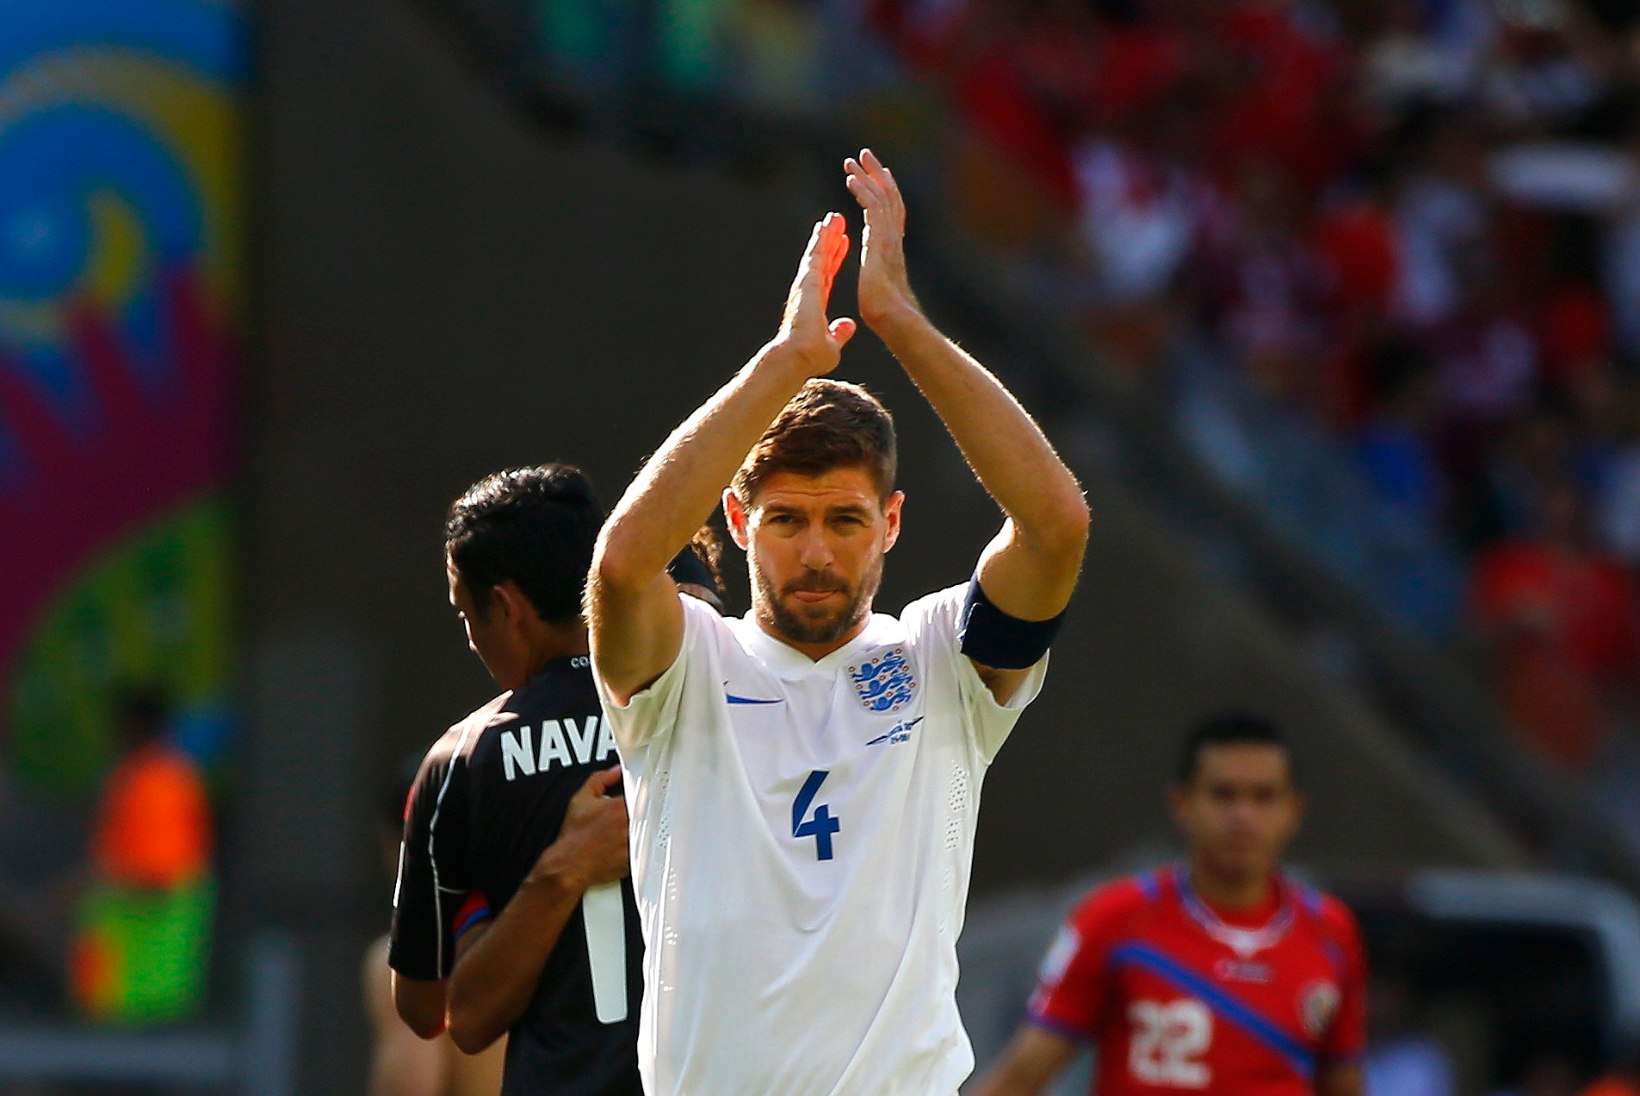 Inglismaa kapten Steven Gerrard otsustas koondisekarjäärile joone alla tõmmata